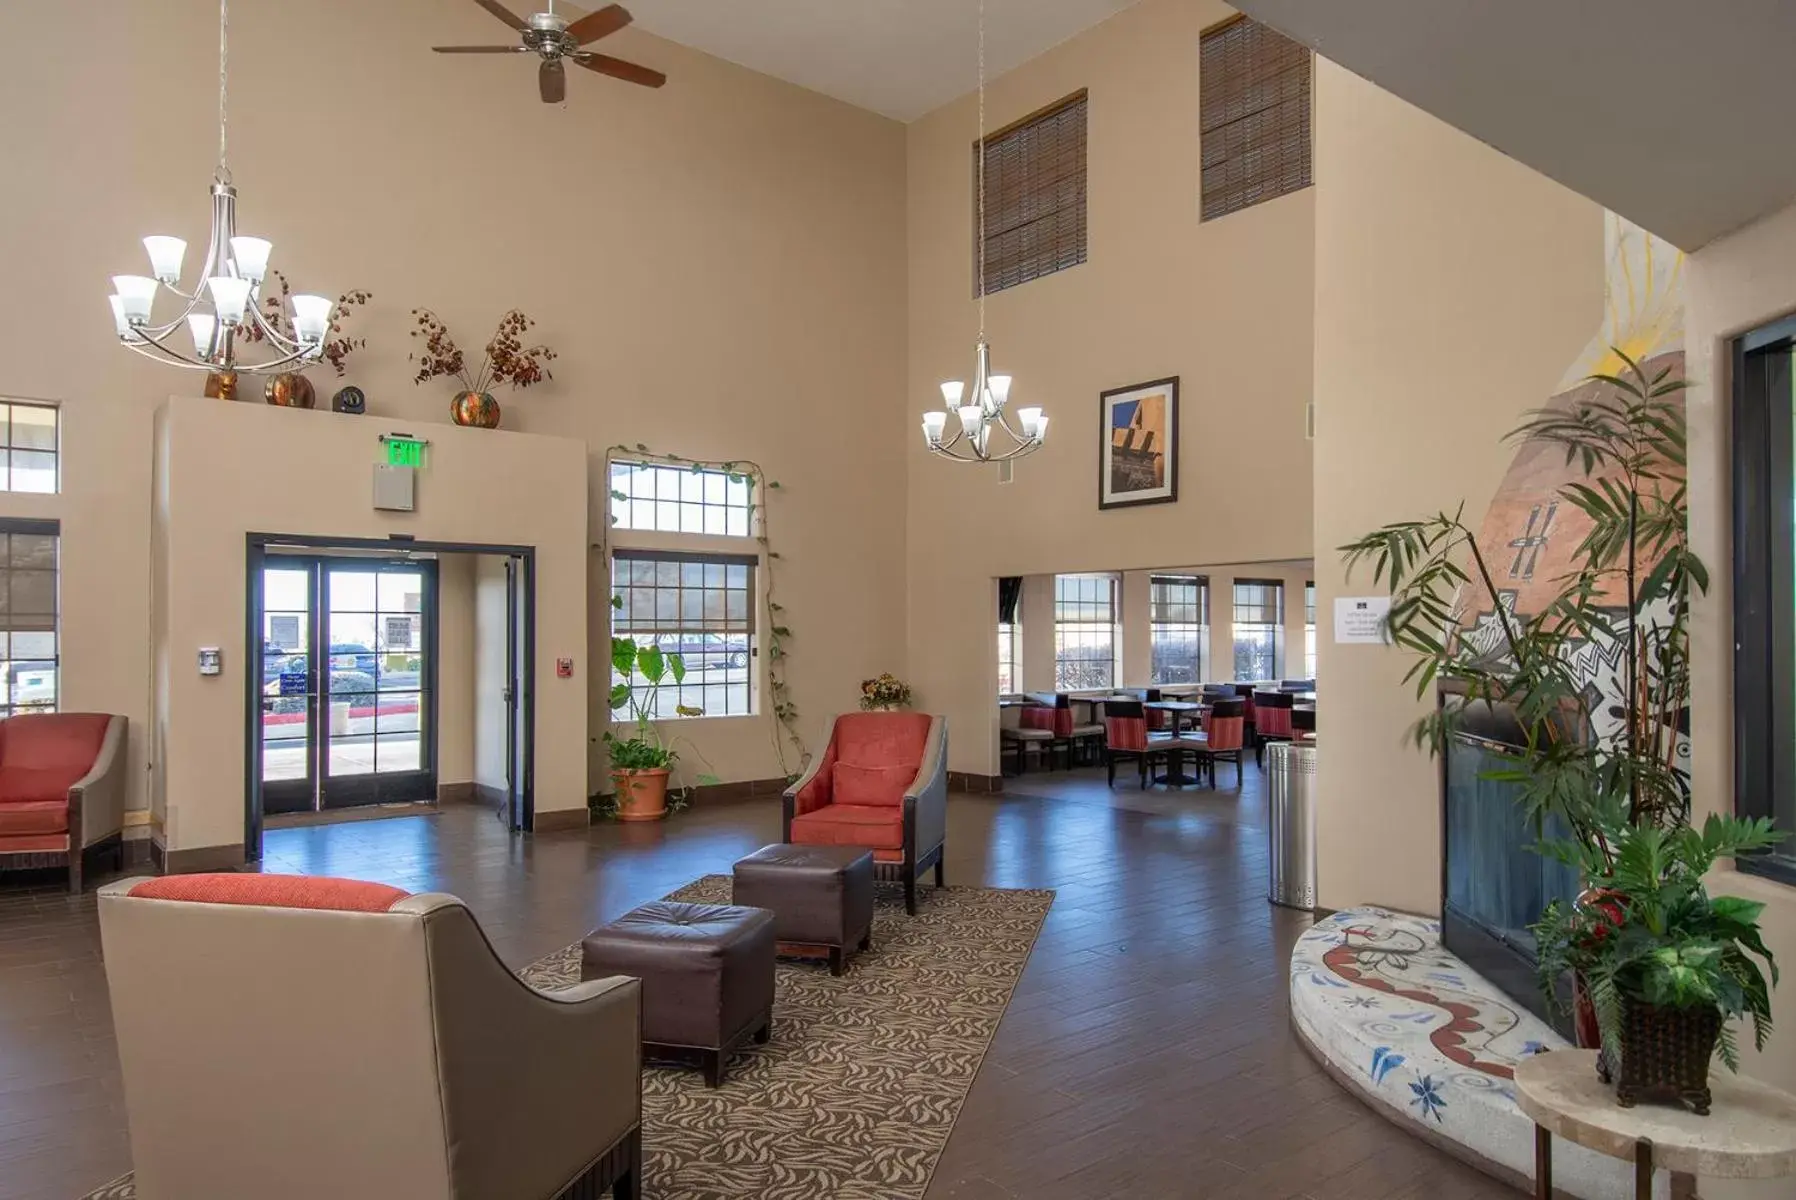 Lobby or reception in Comfort Inn Santa Fe